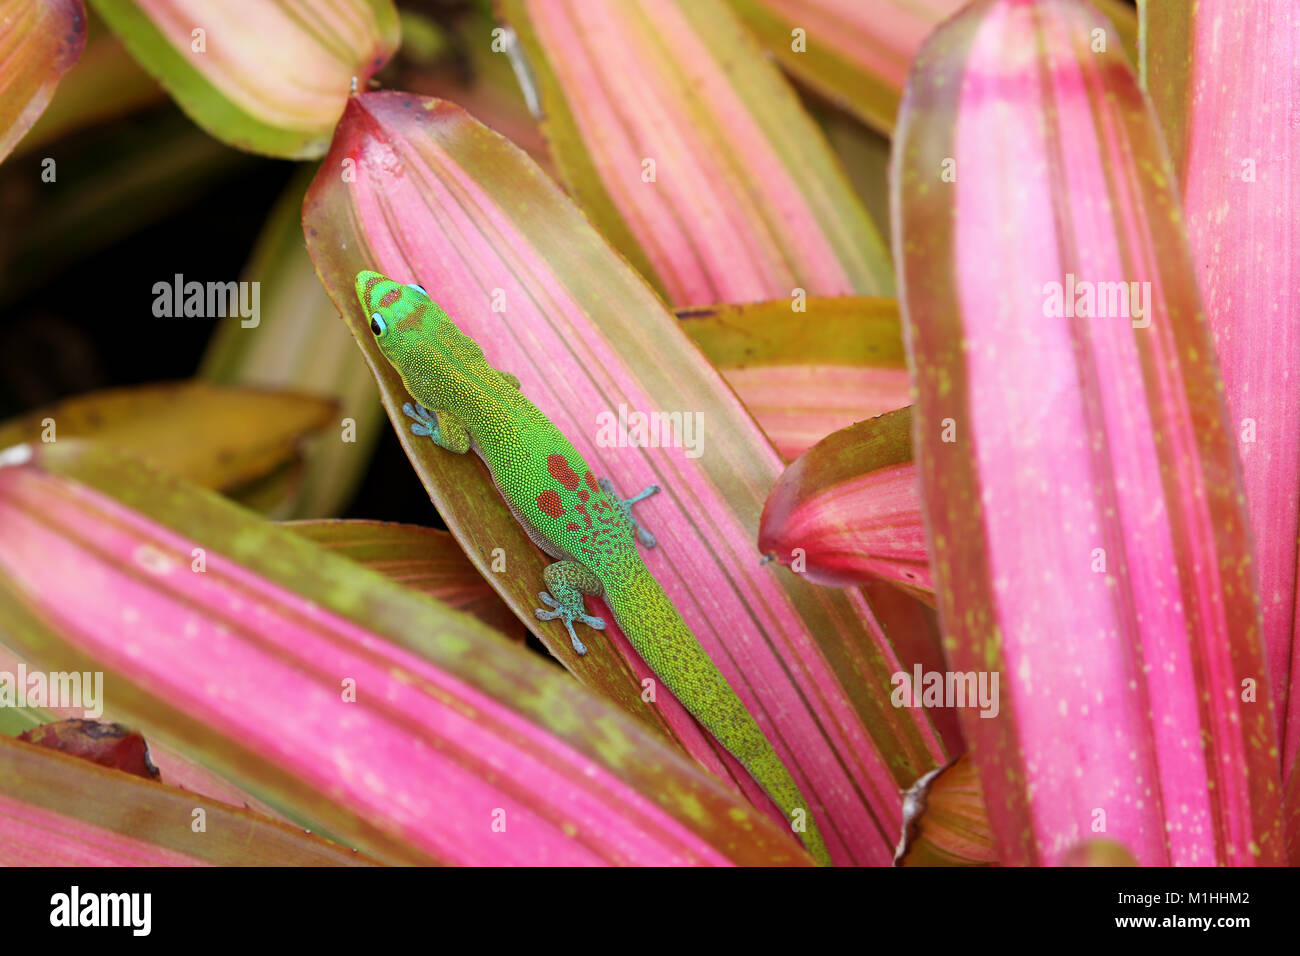 Gold dust day gecko on Bromeliad plant leaf, Hawaii Stock Photo